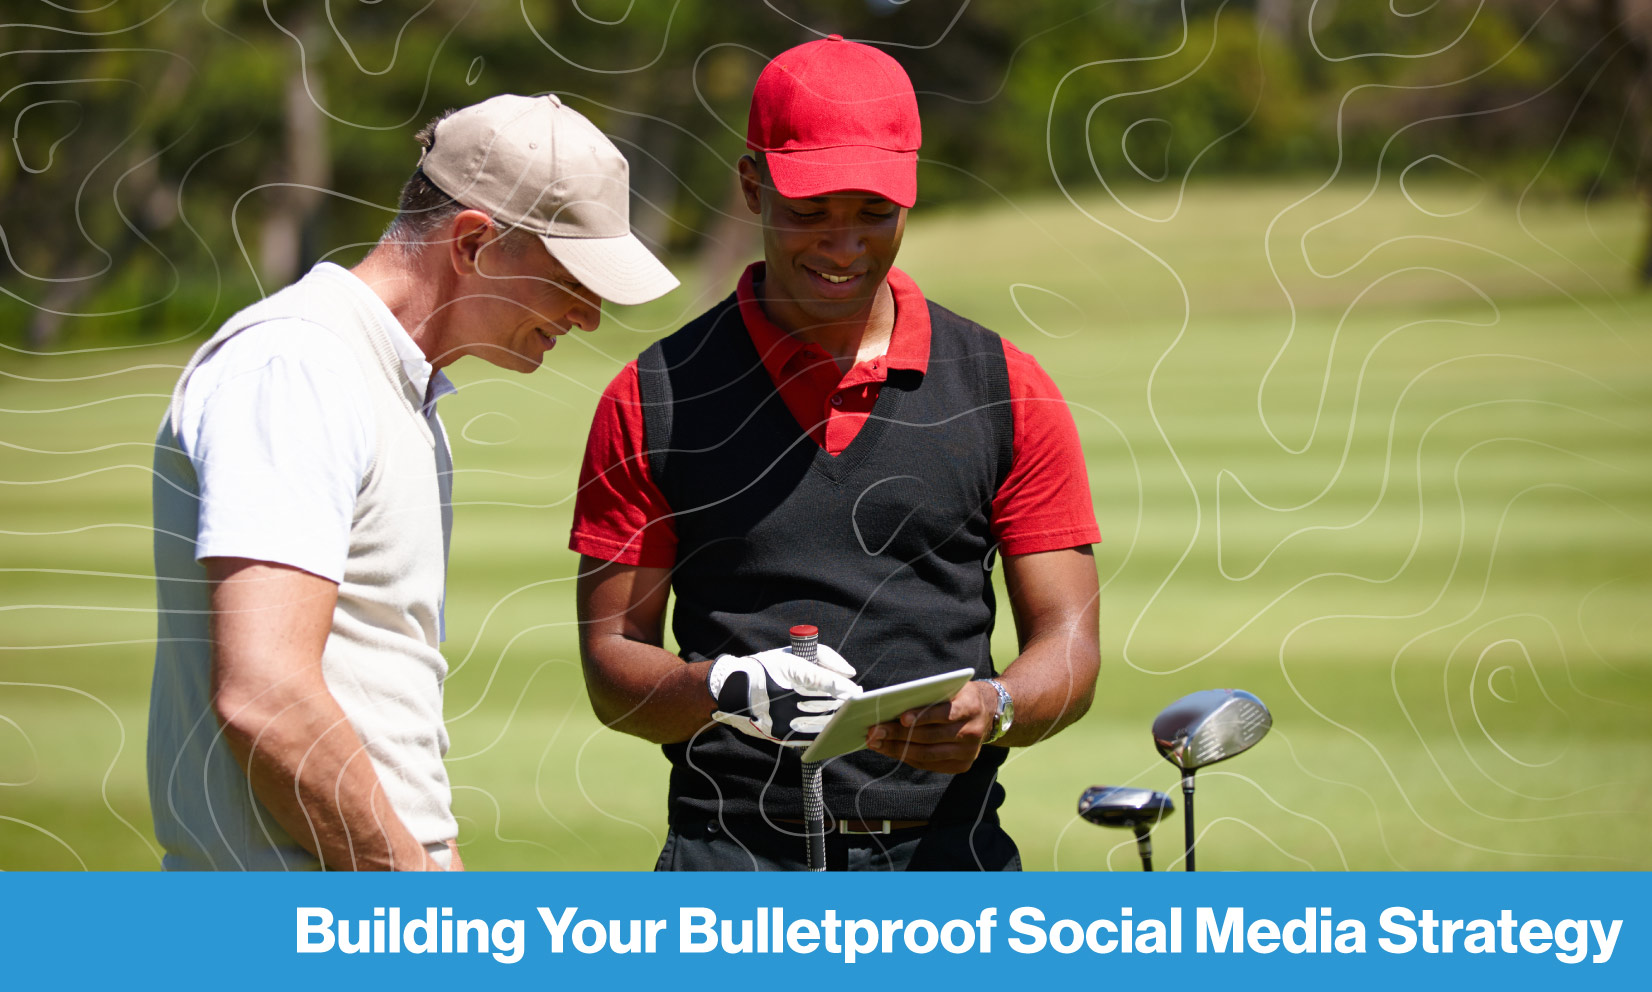 Building your bulletproof social media strategy